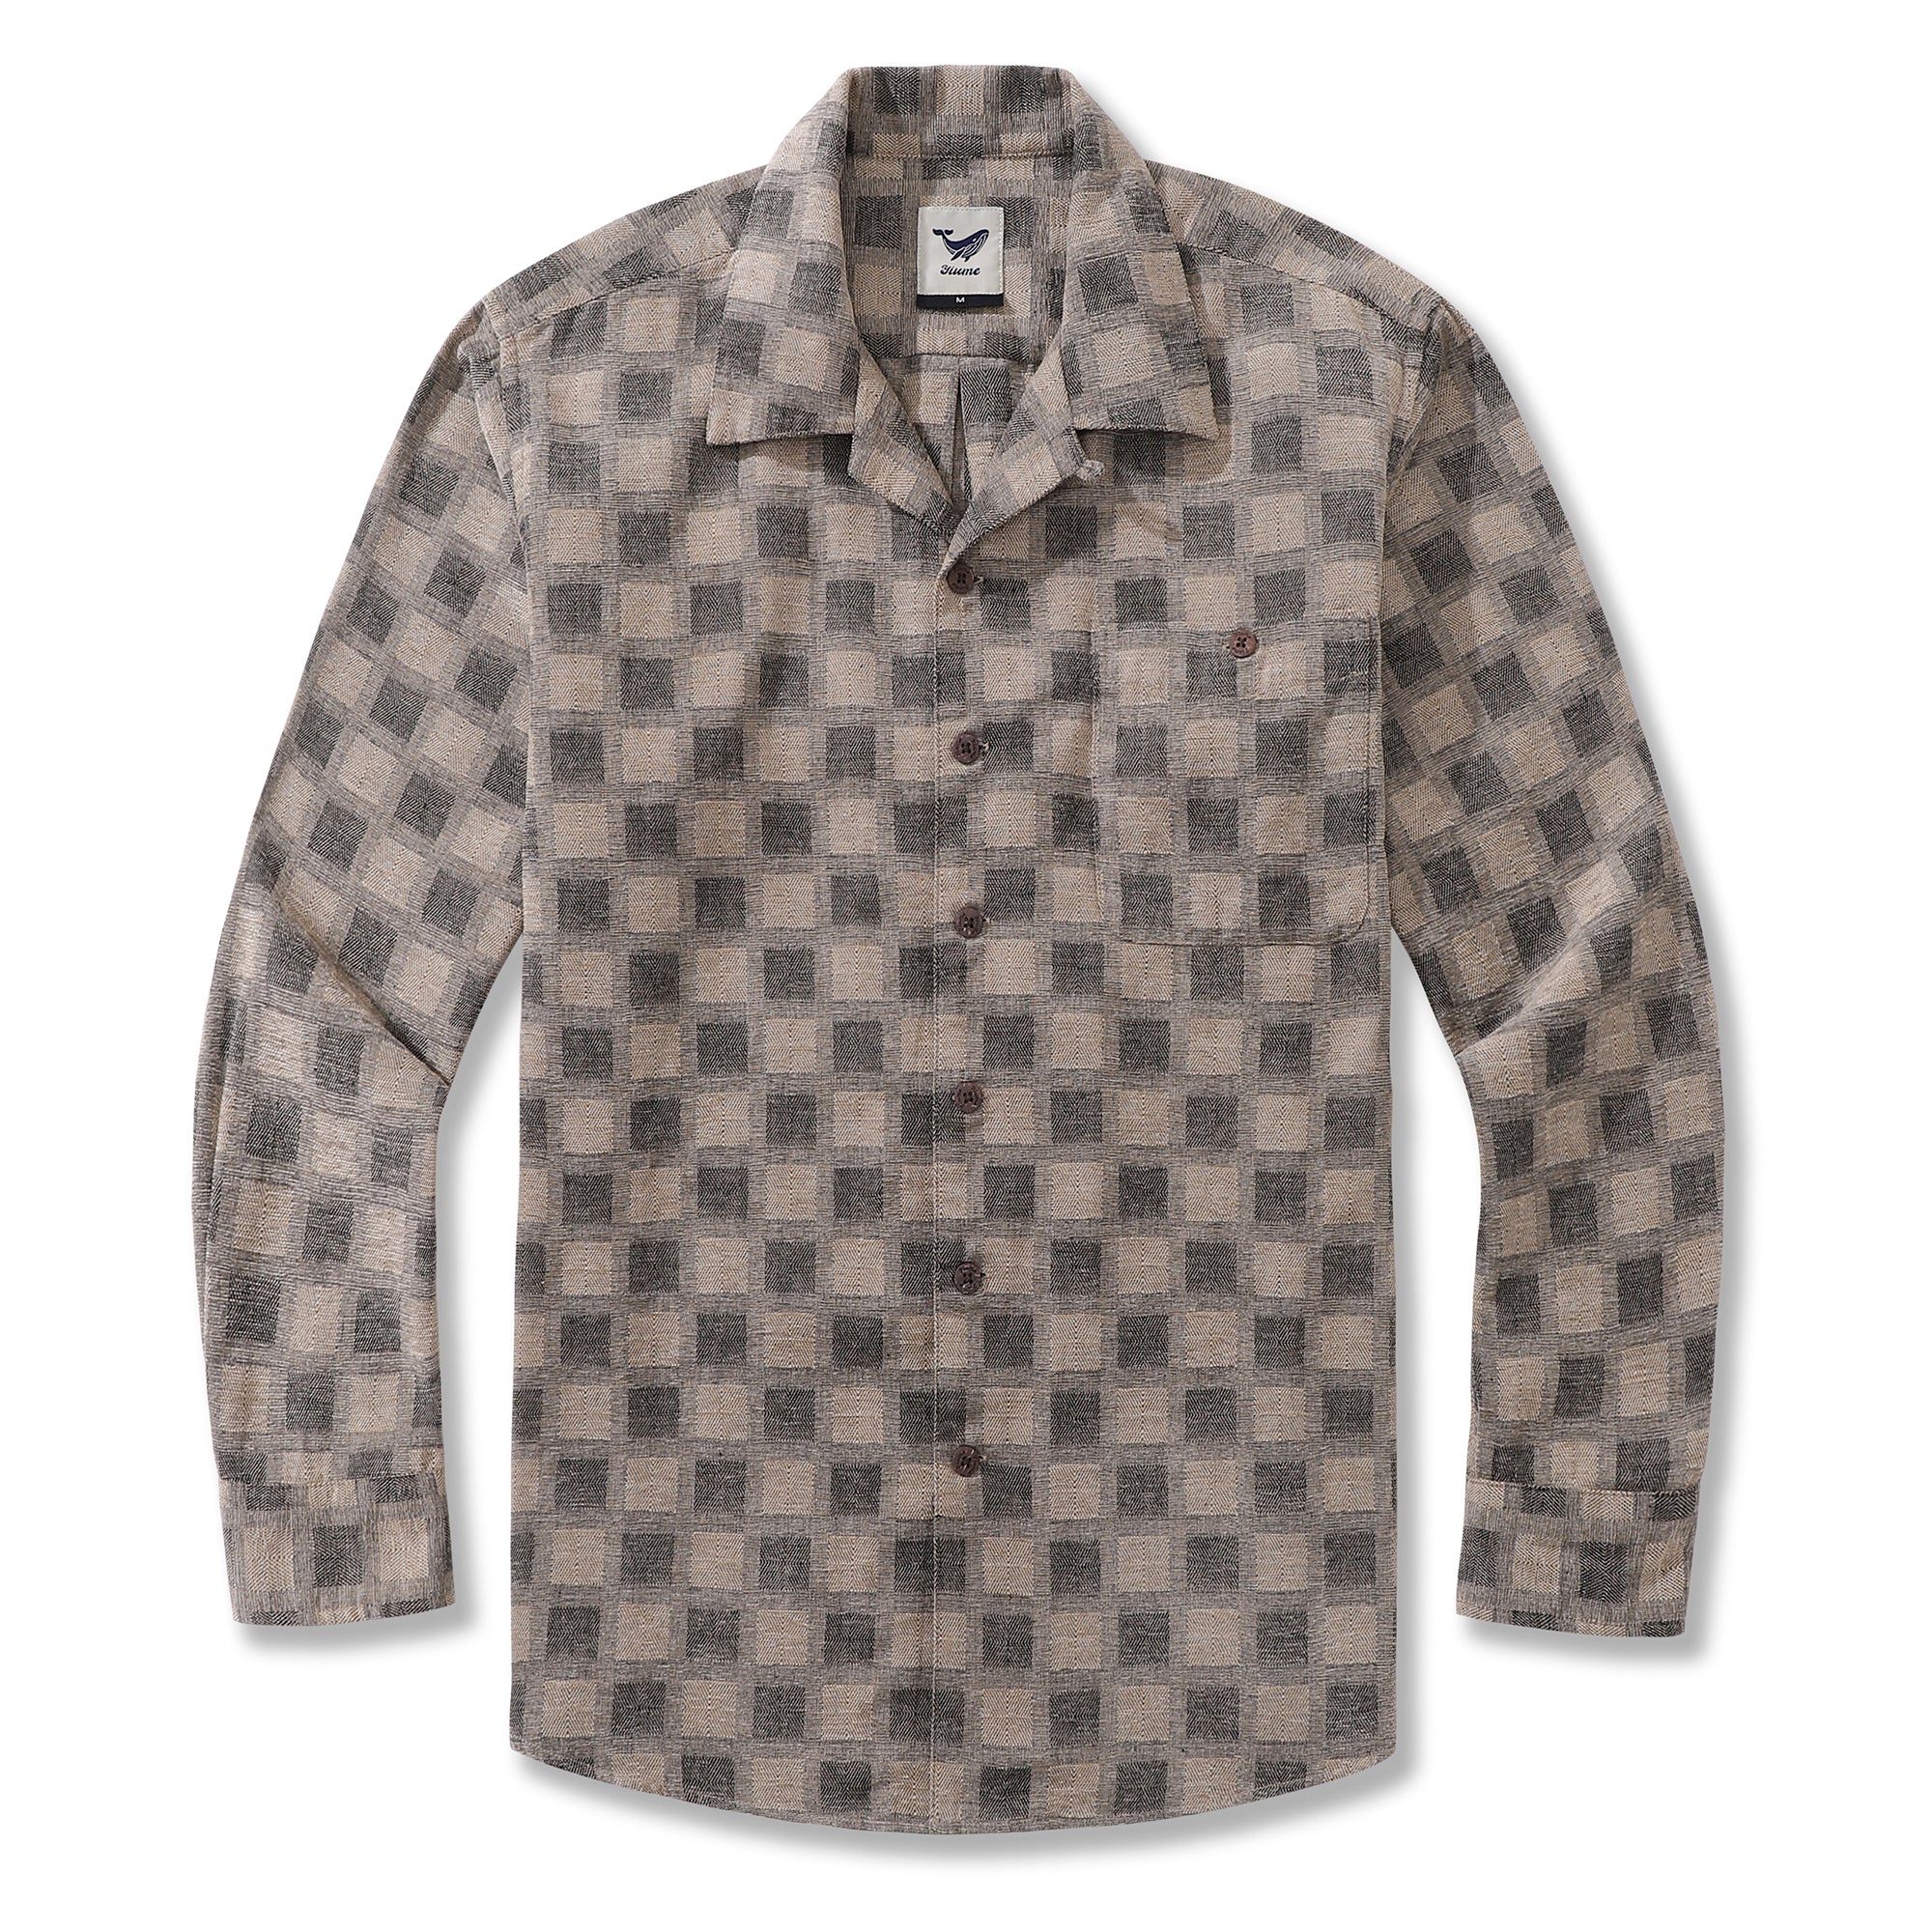 Men's Hawaiian Shirt Cotton Camp Collar Long Sleeve Classic Check Shirt - LIGHT CAMEL